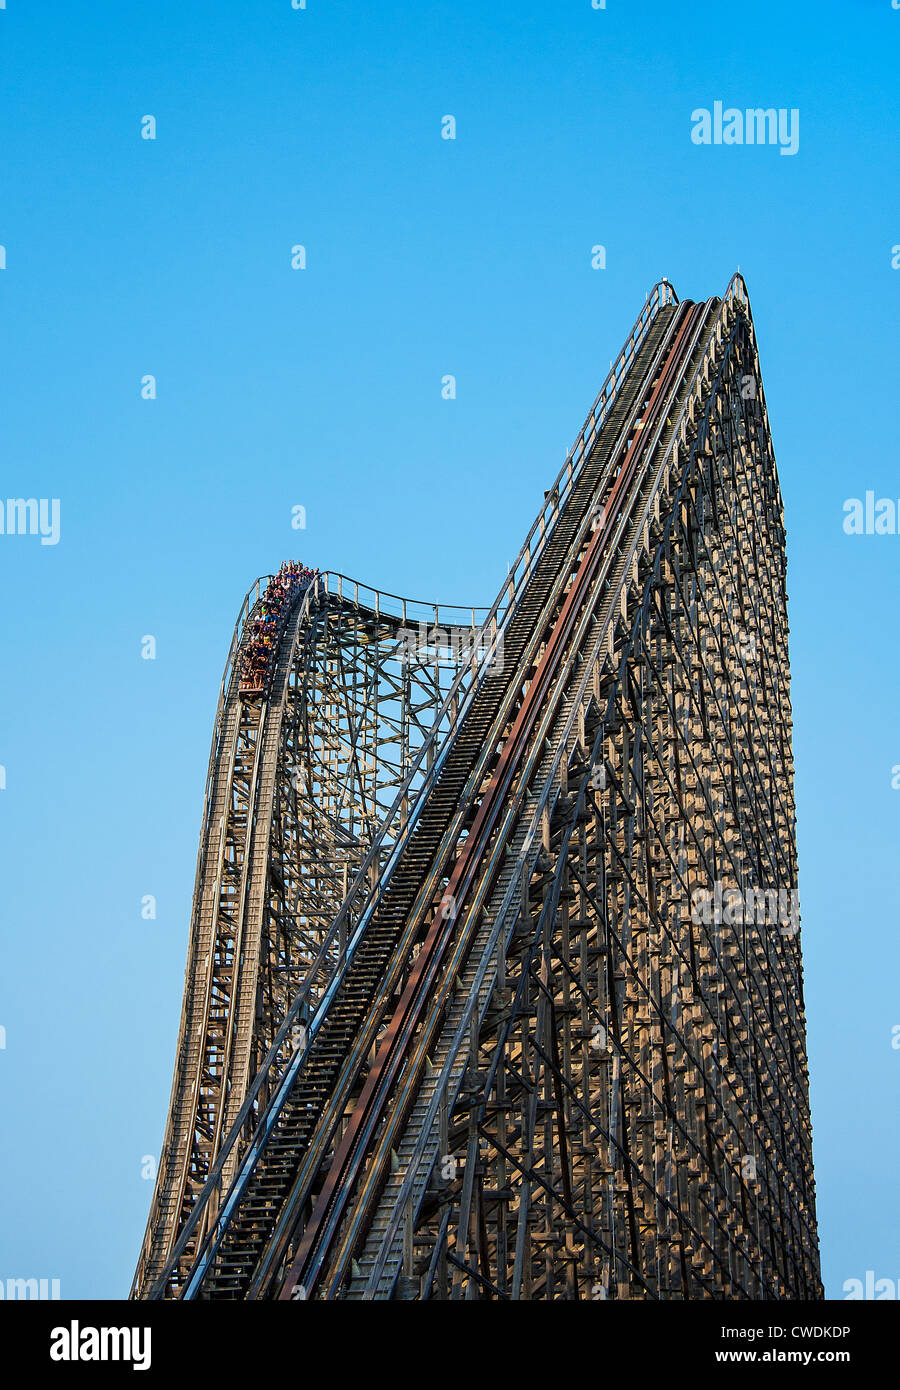 El Toro wooden roller coaster, Great Adventure, Six Flags, New Jersey, USA Stock Photo